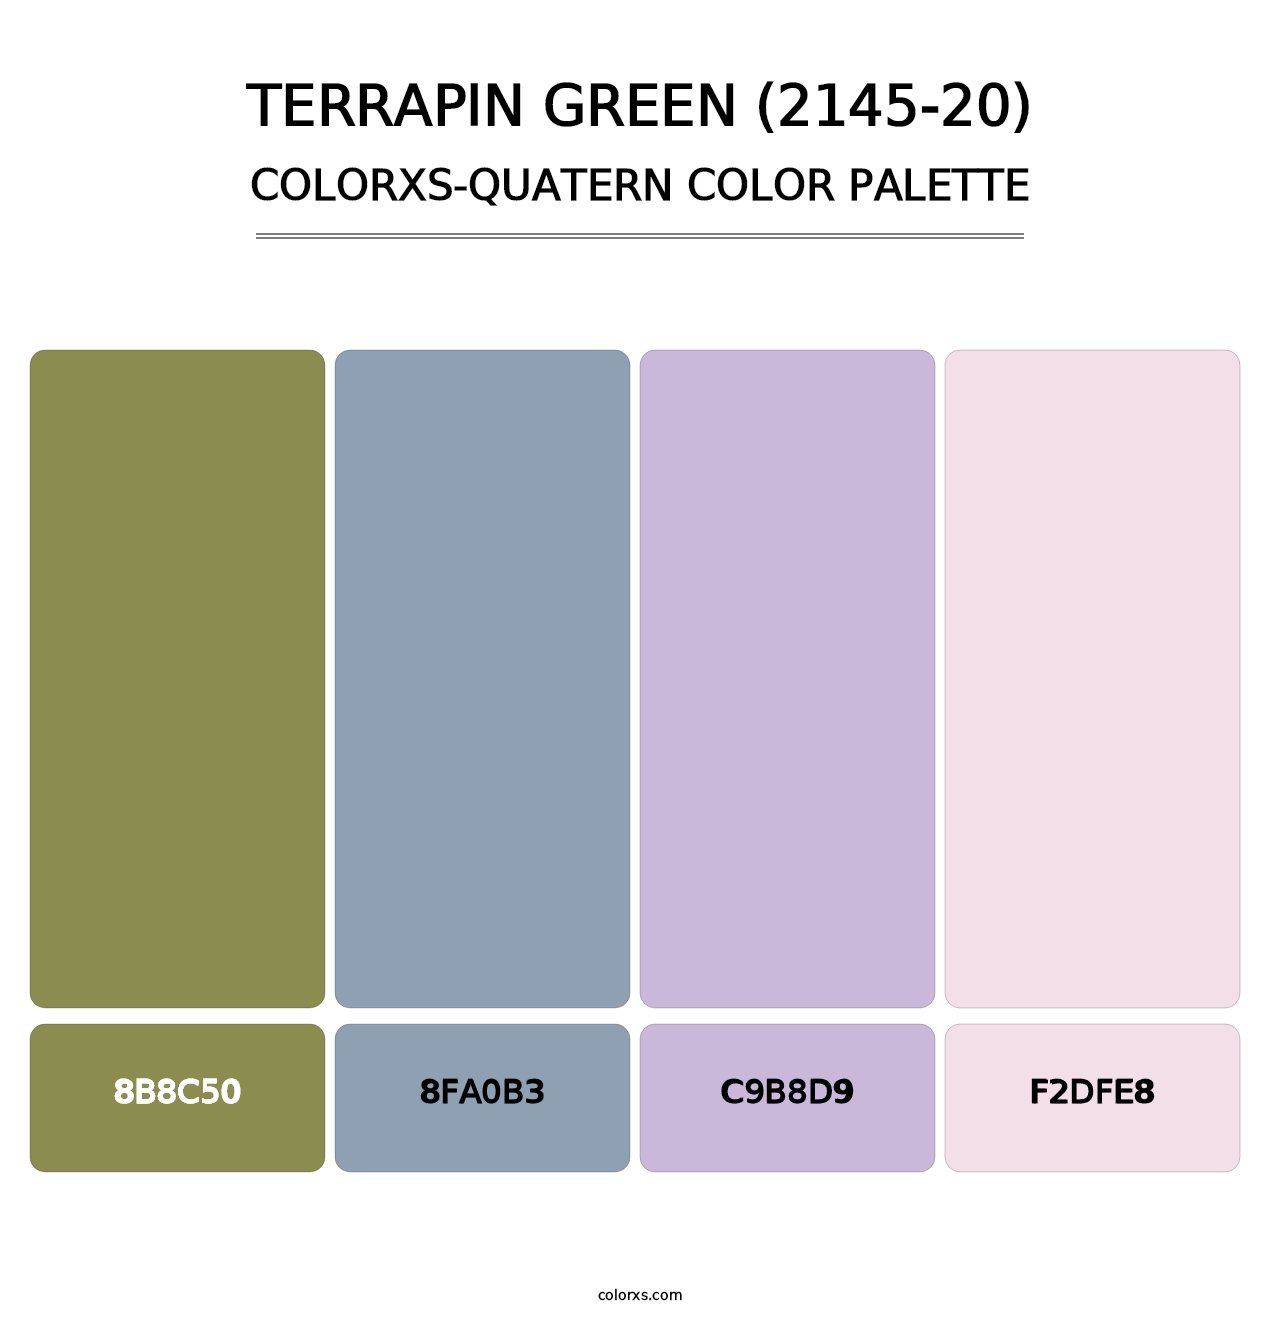 Terrapin Green (2145-20) - Colorxs Quatern Palette